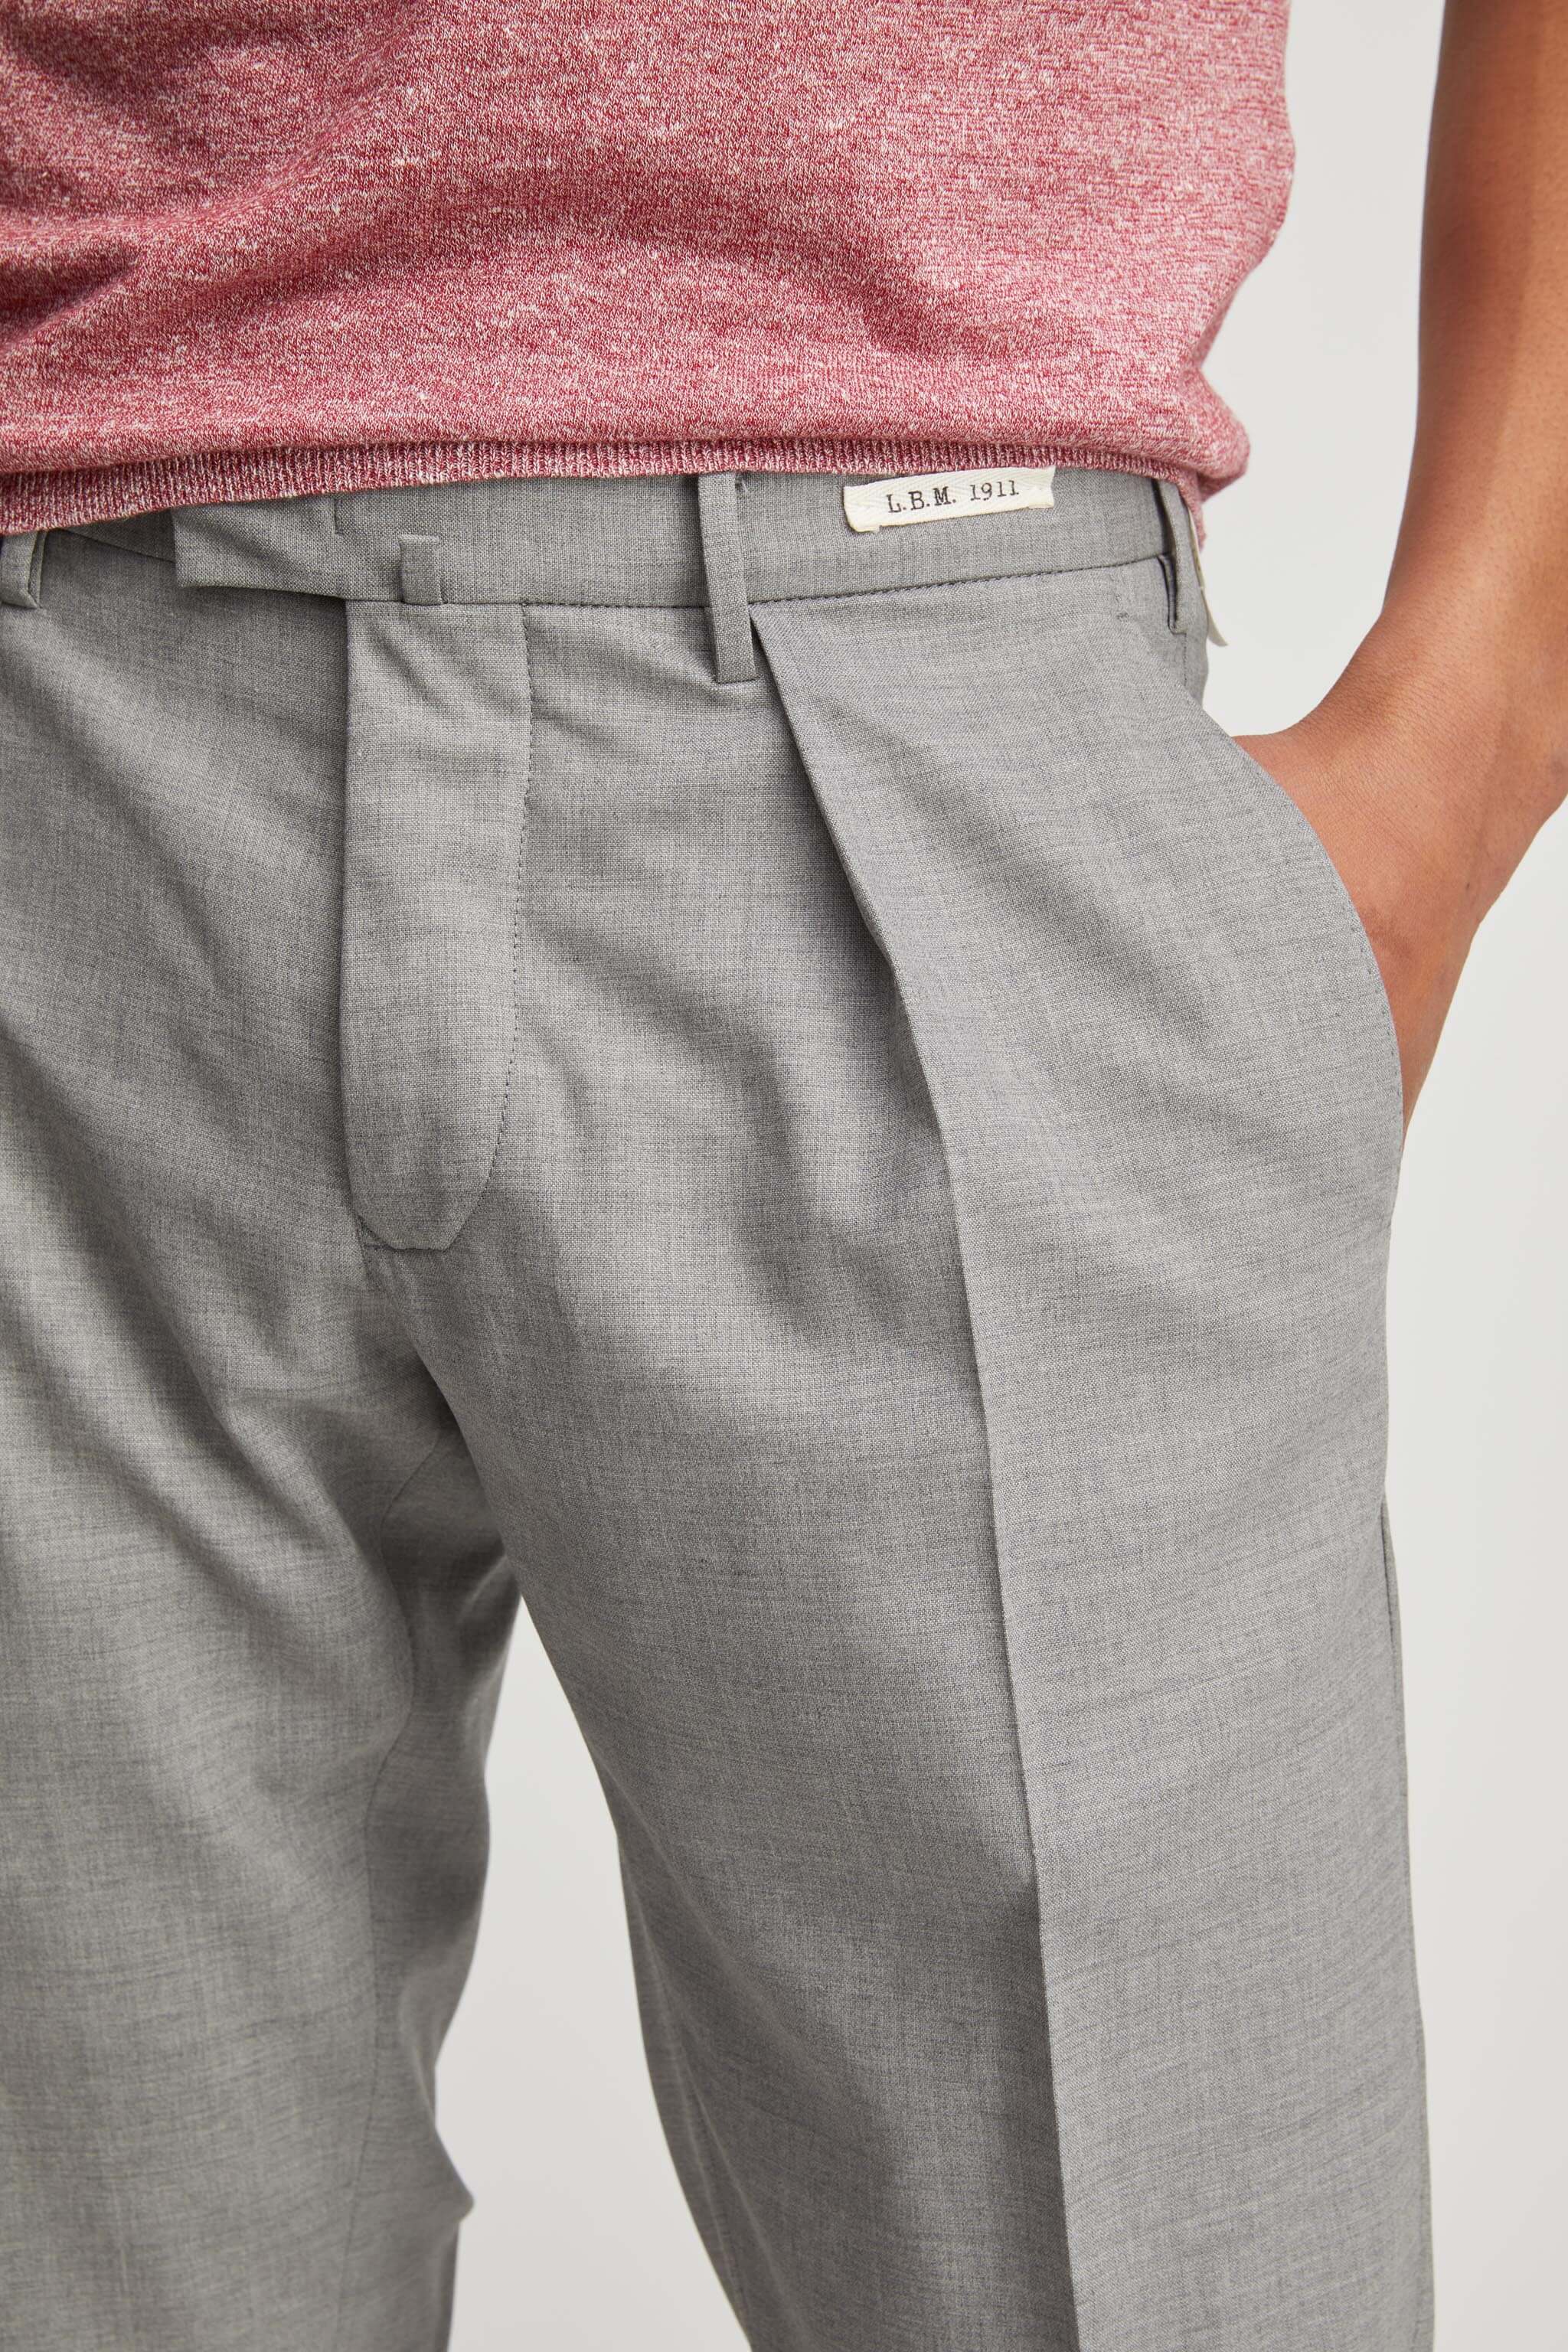 PHIL pants in light grey